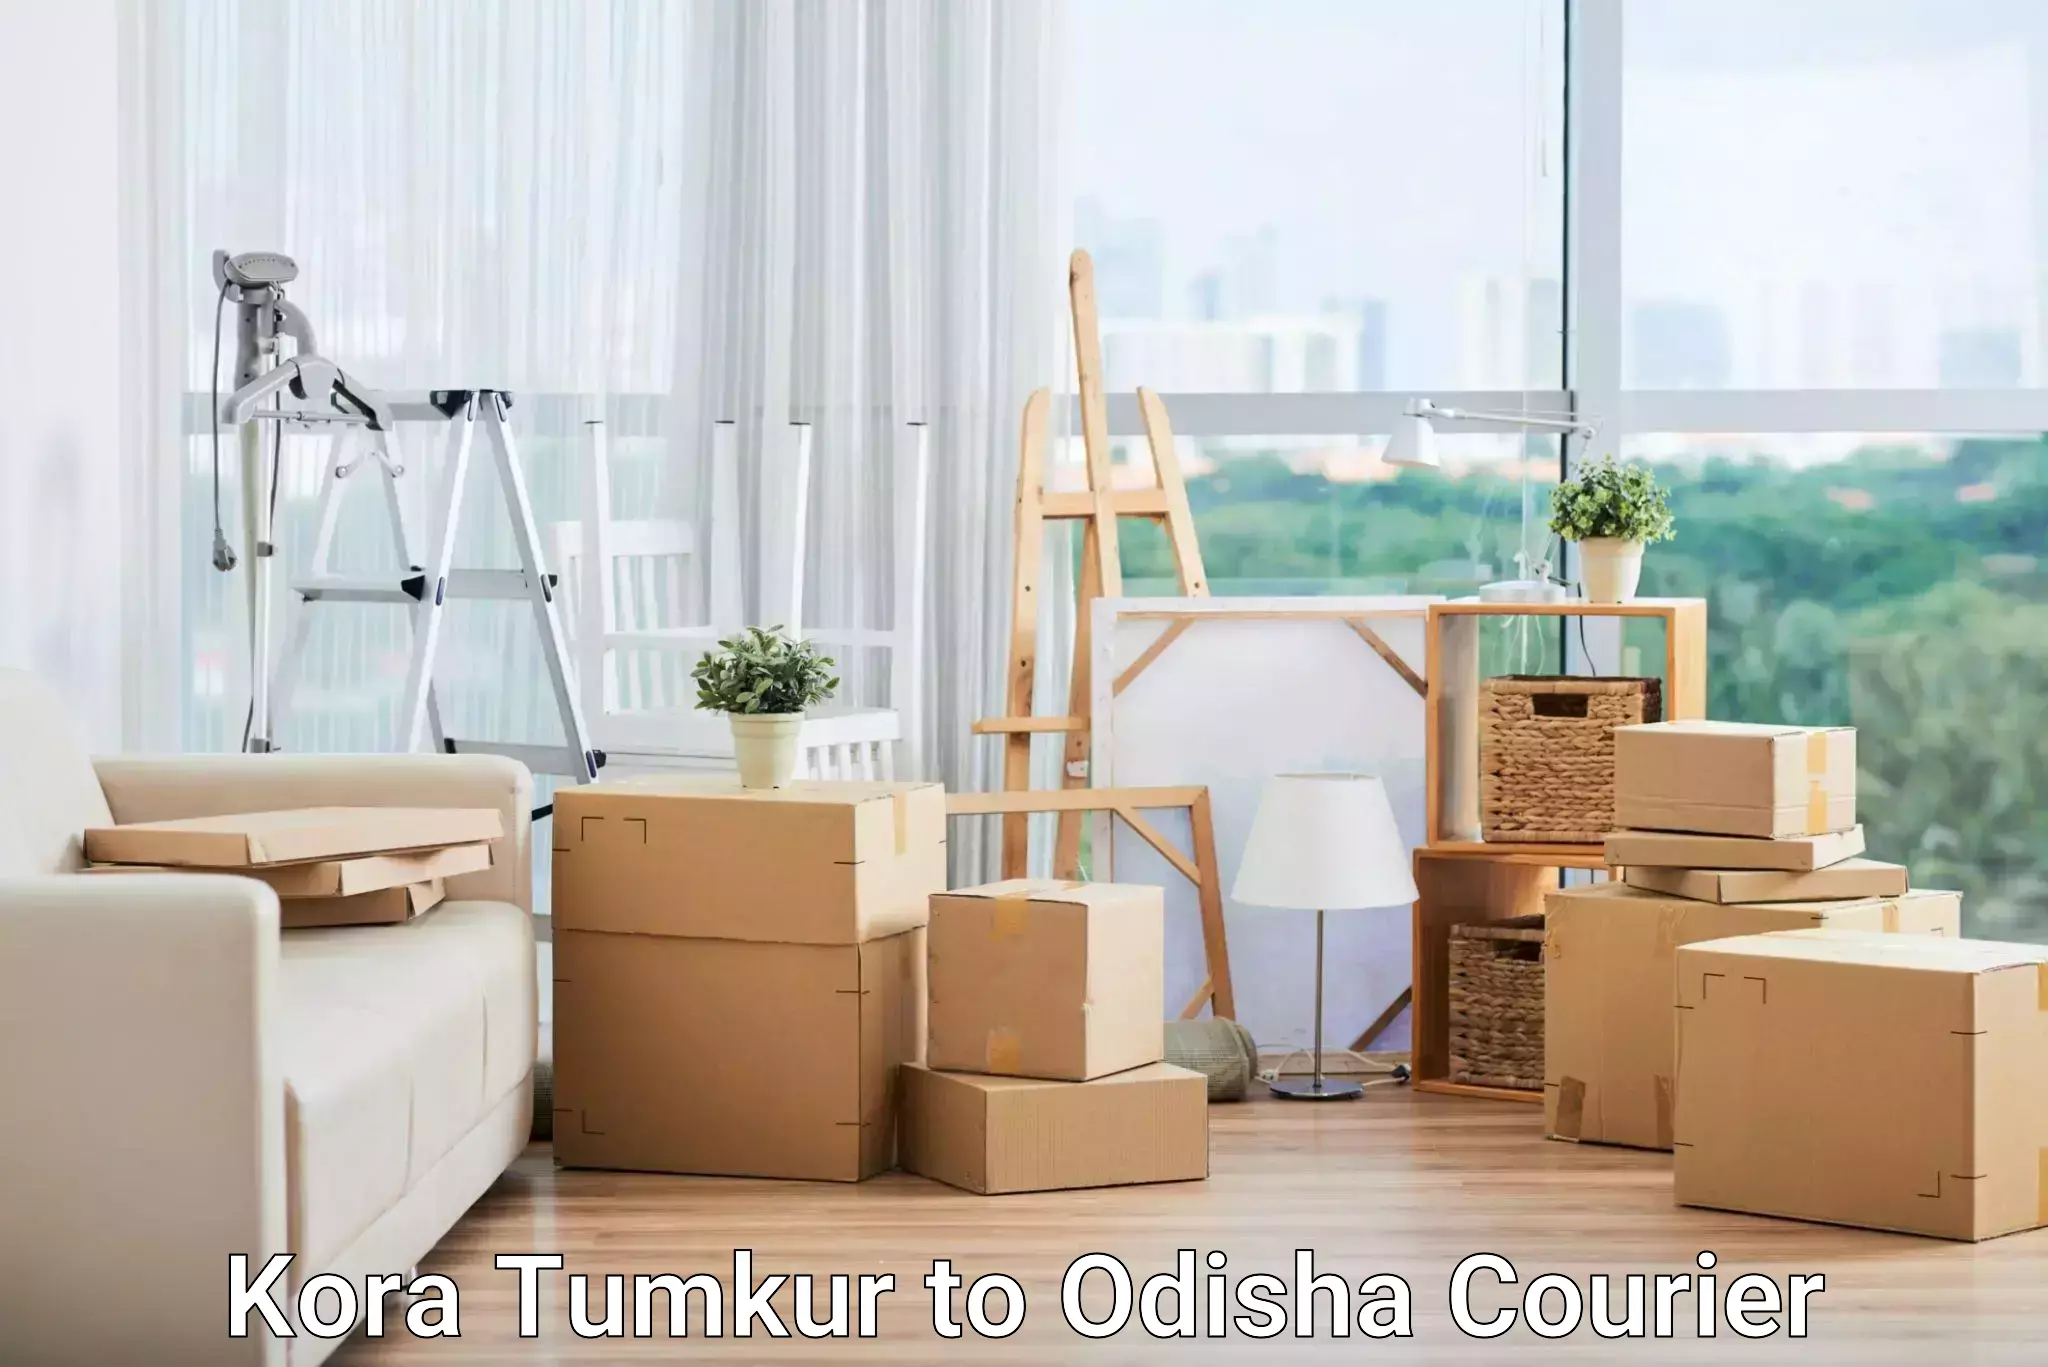 Courier service efficiency Kora Tumkur to Odisha